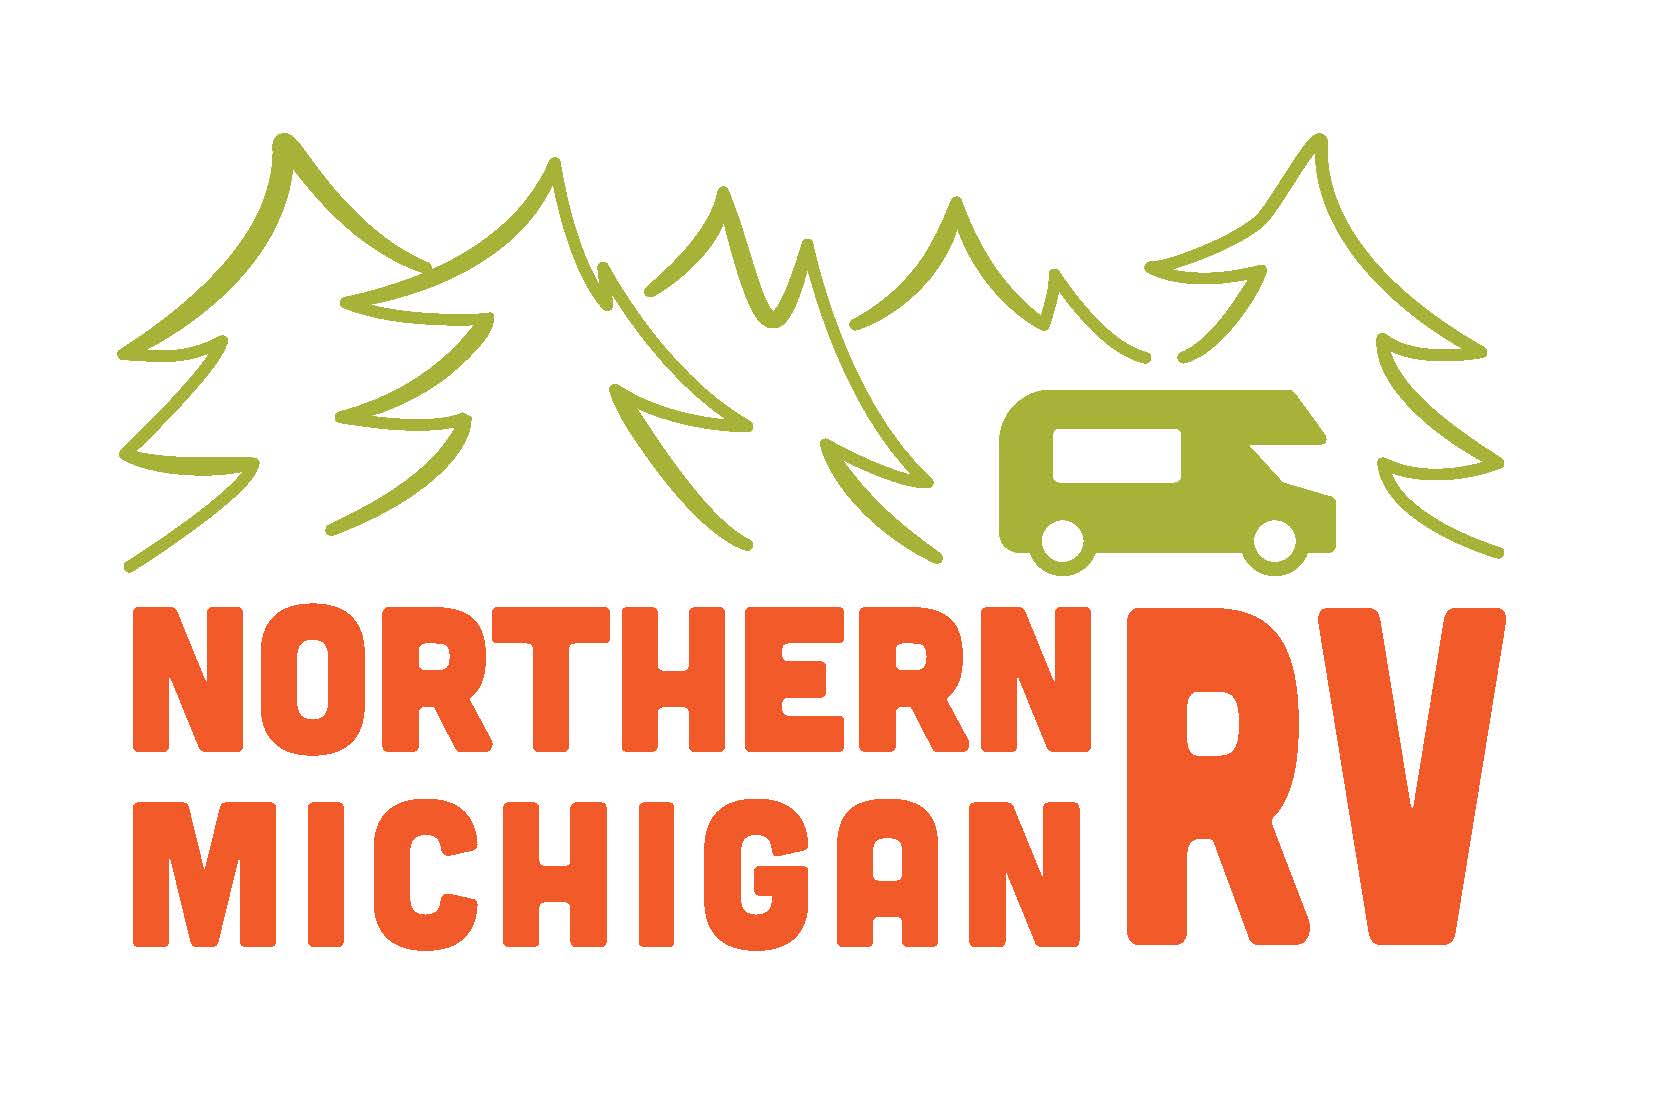 Northern Michigan RV Logo